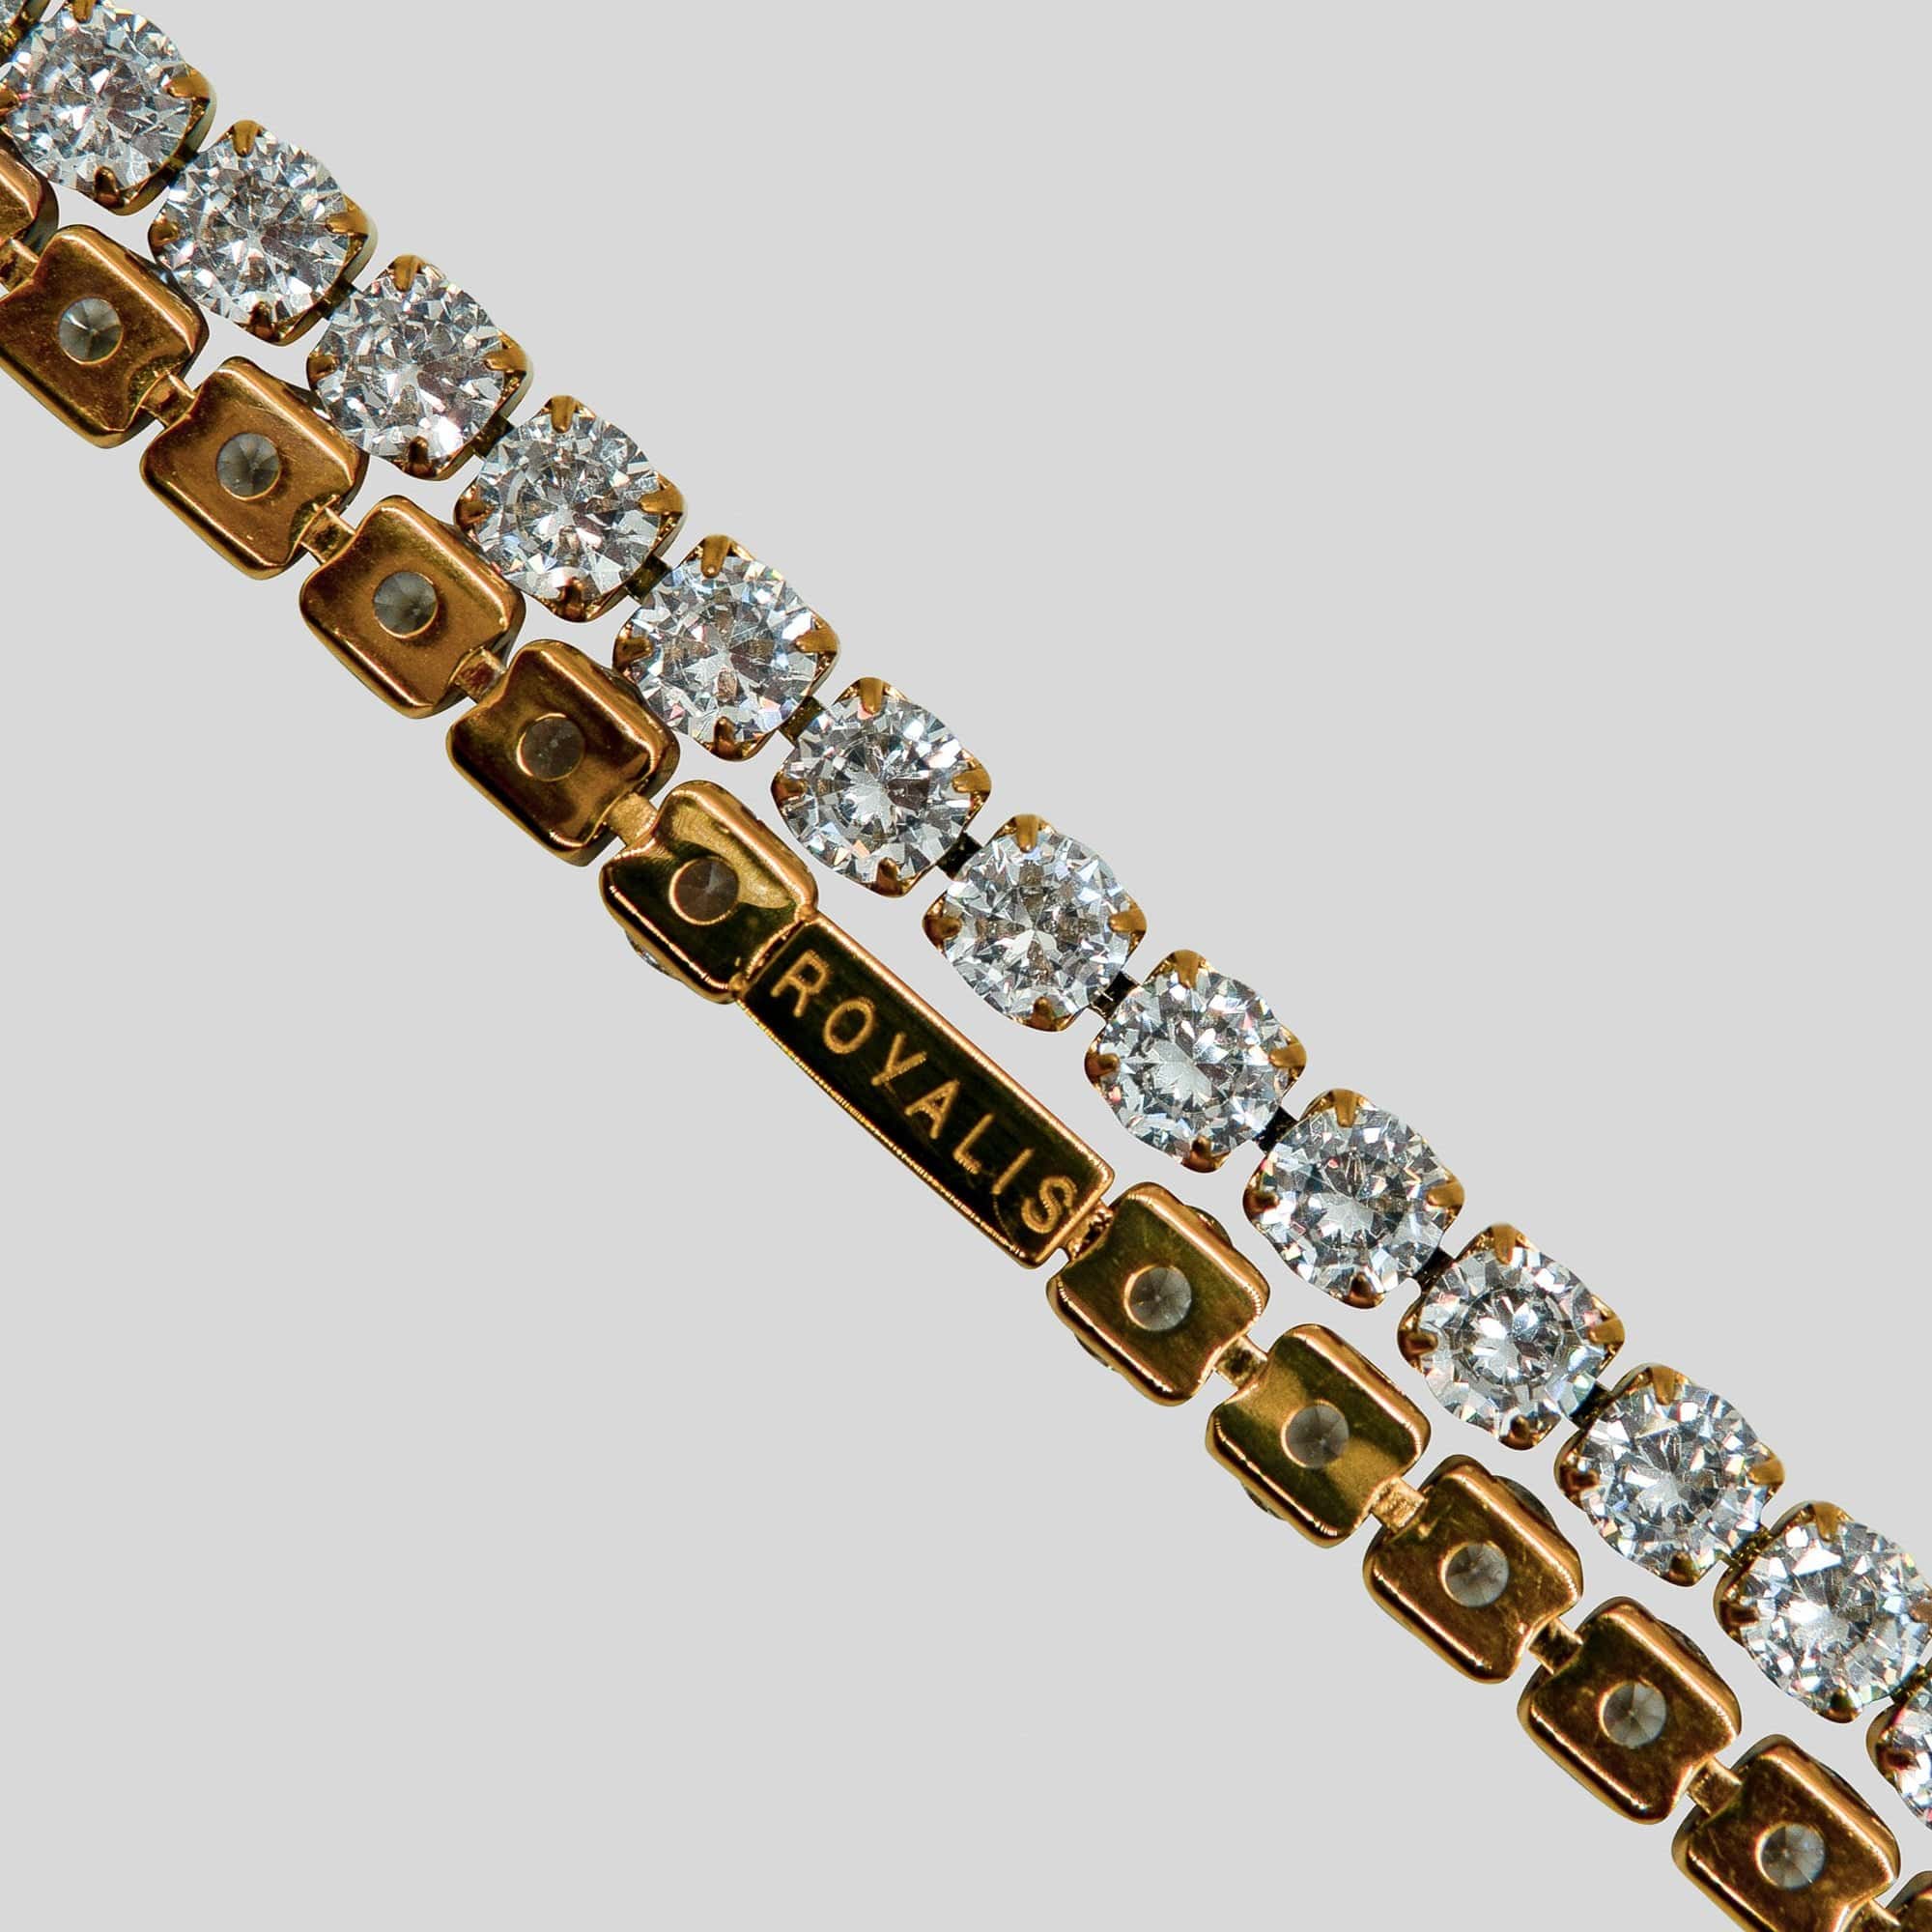 Tennis chain (Gold) 5mm - ROYALIS MELBOURNE